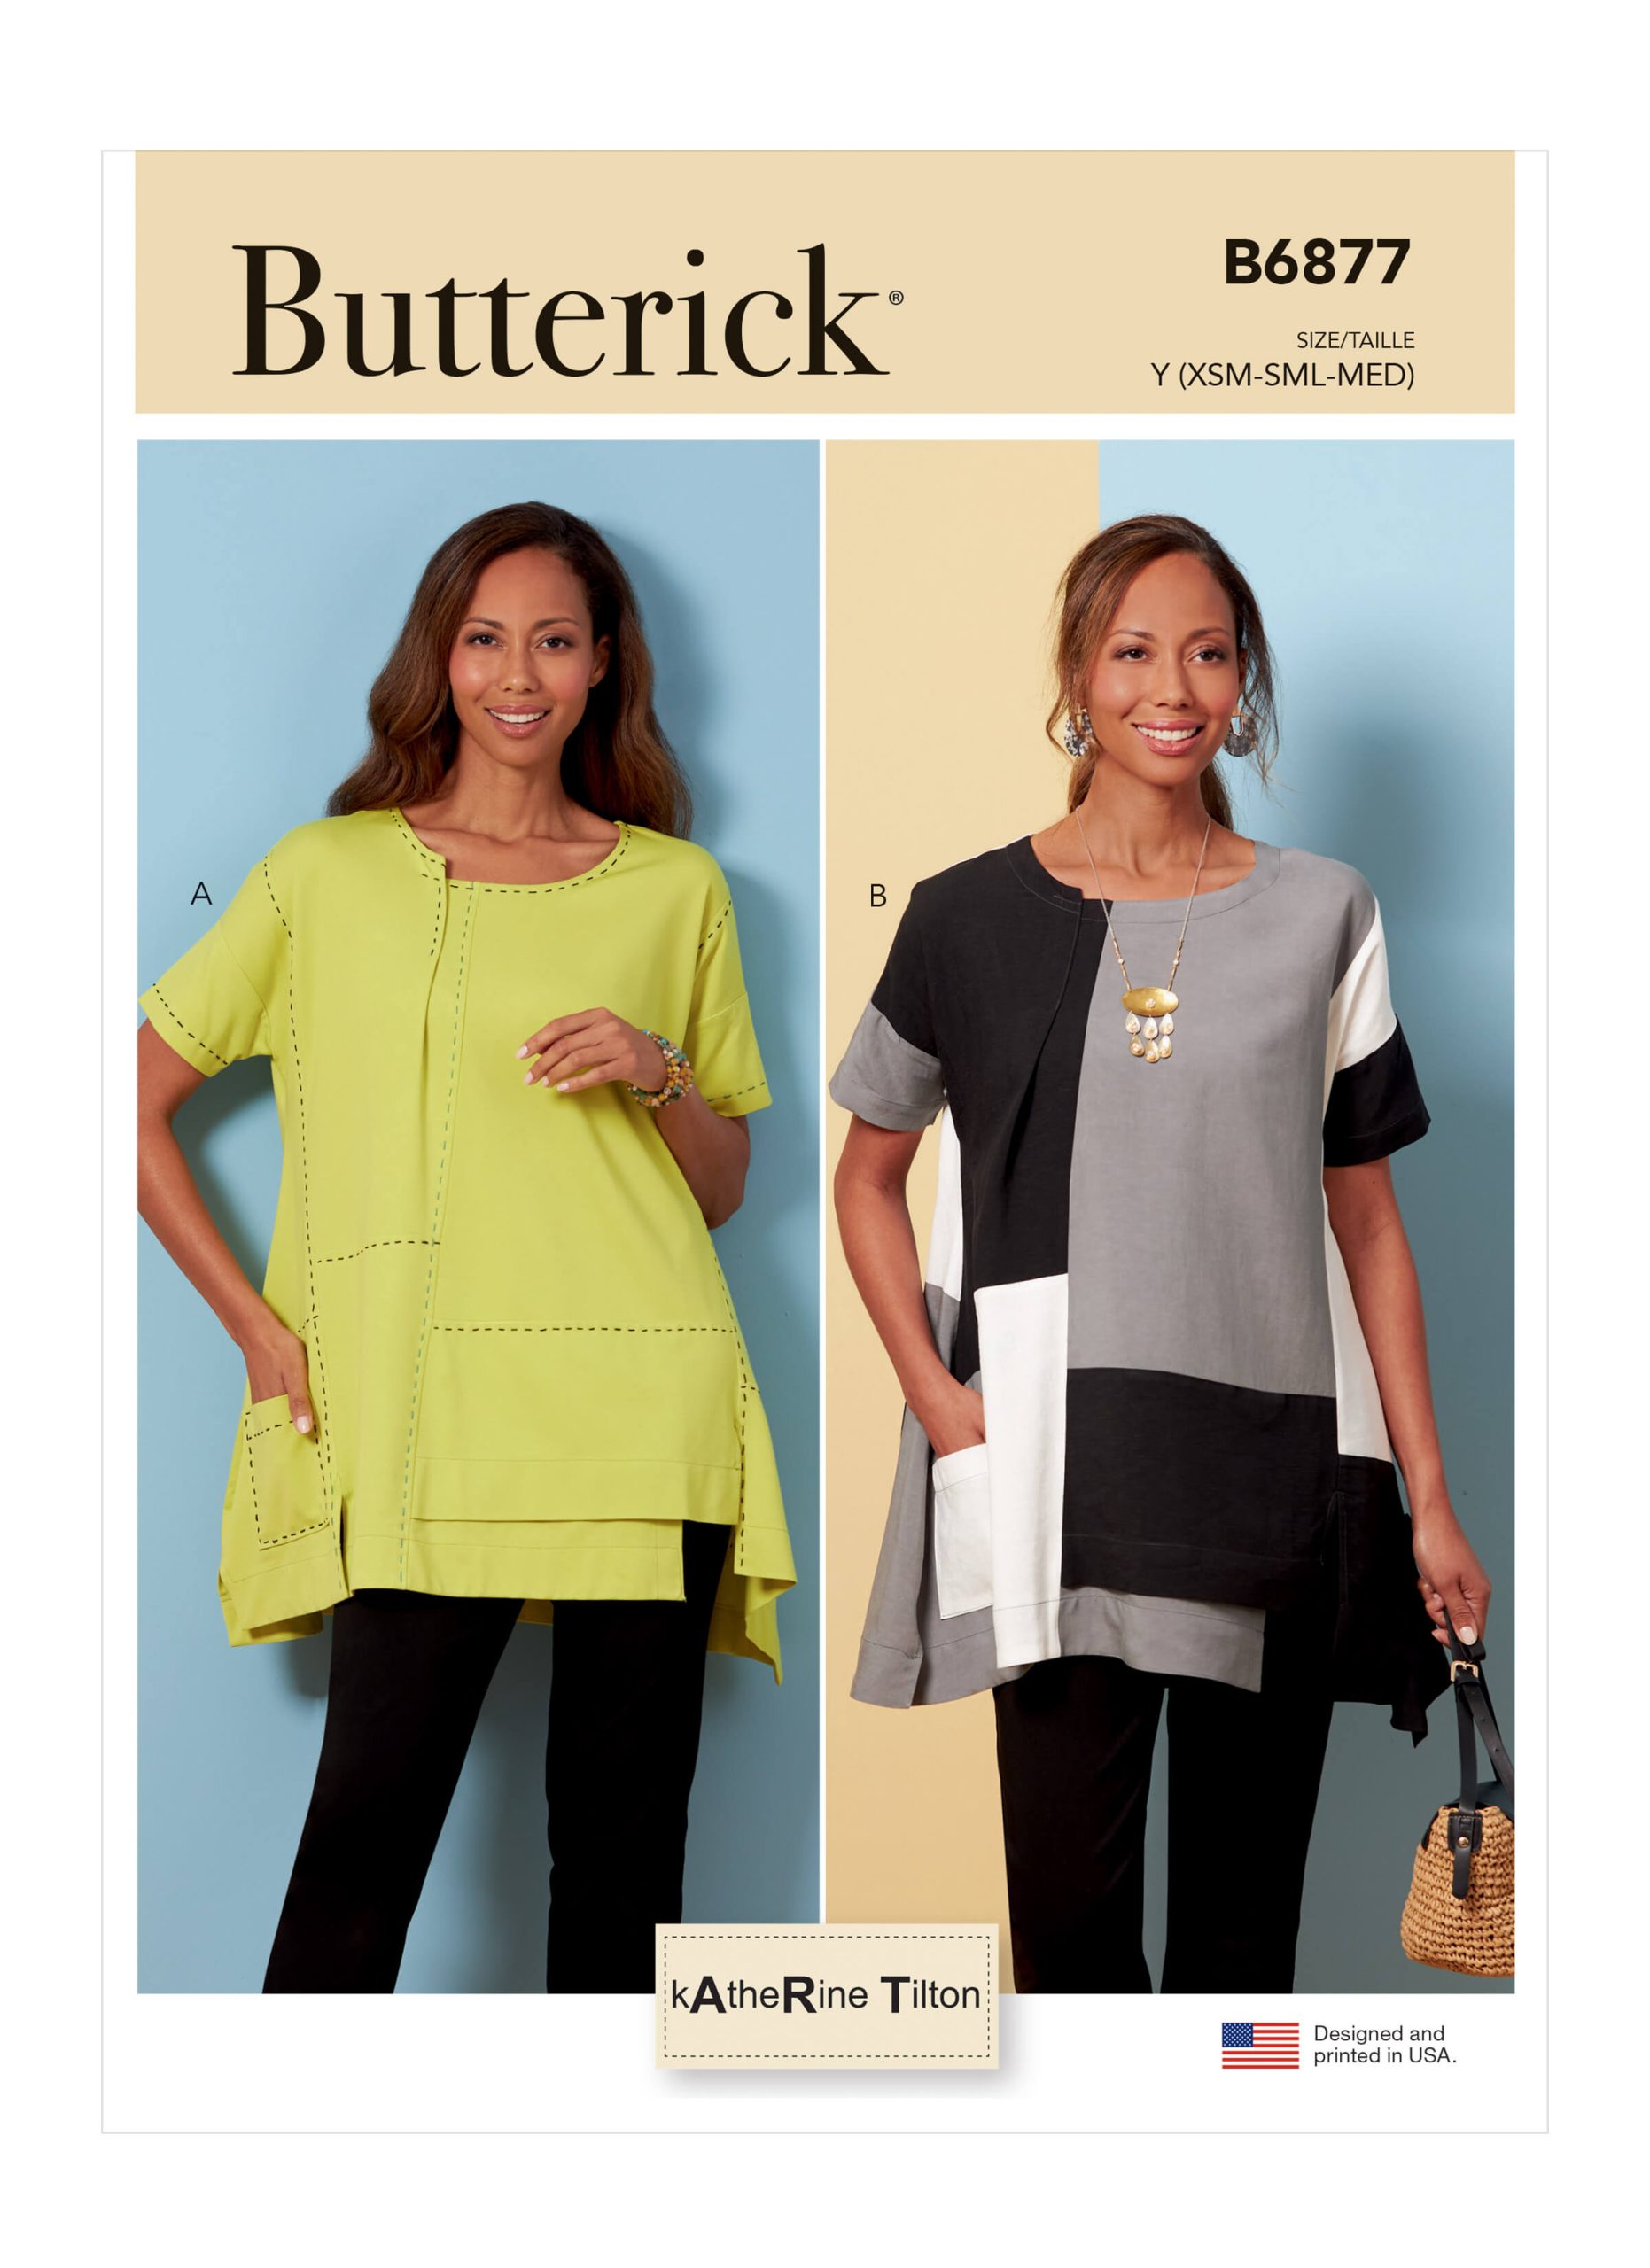 Butterick Sewing Pattern B6877 Katherine Tilton Misses' Top